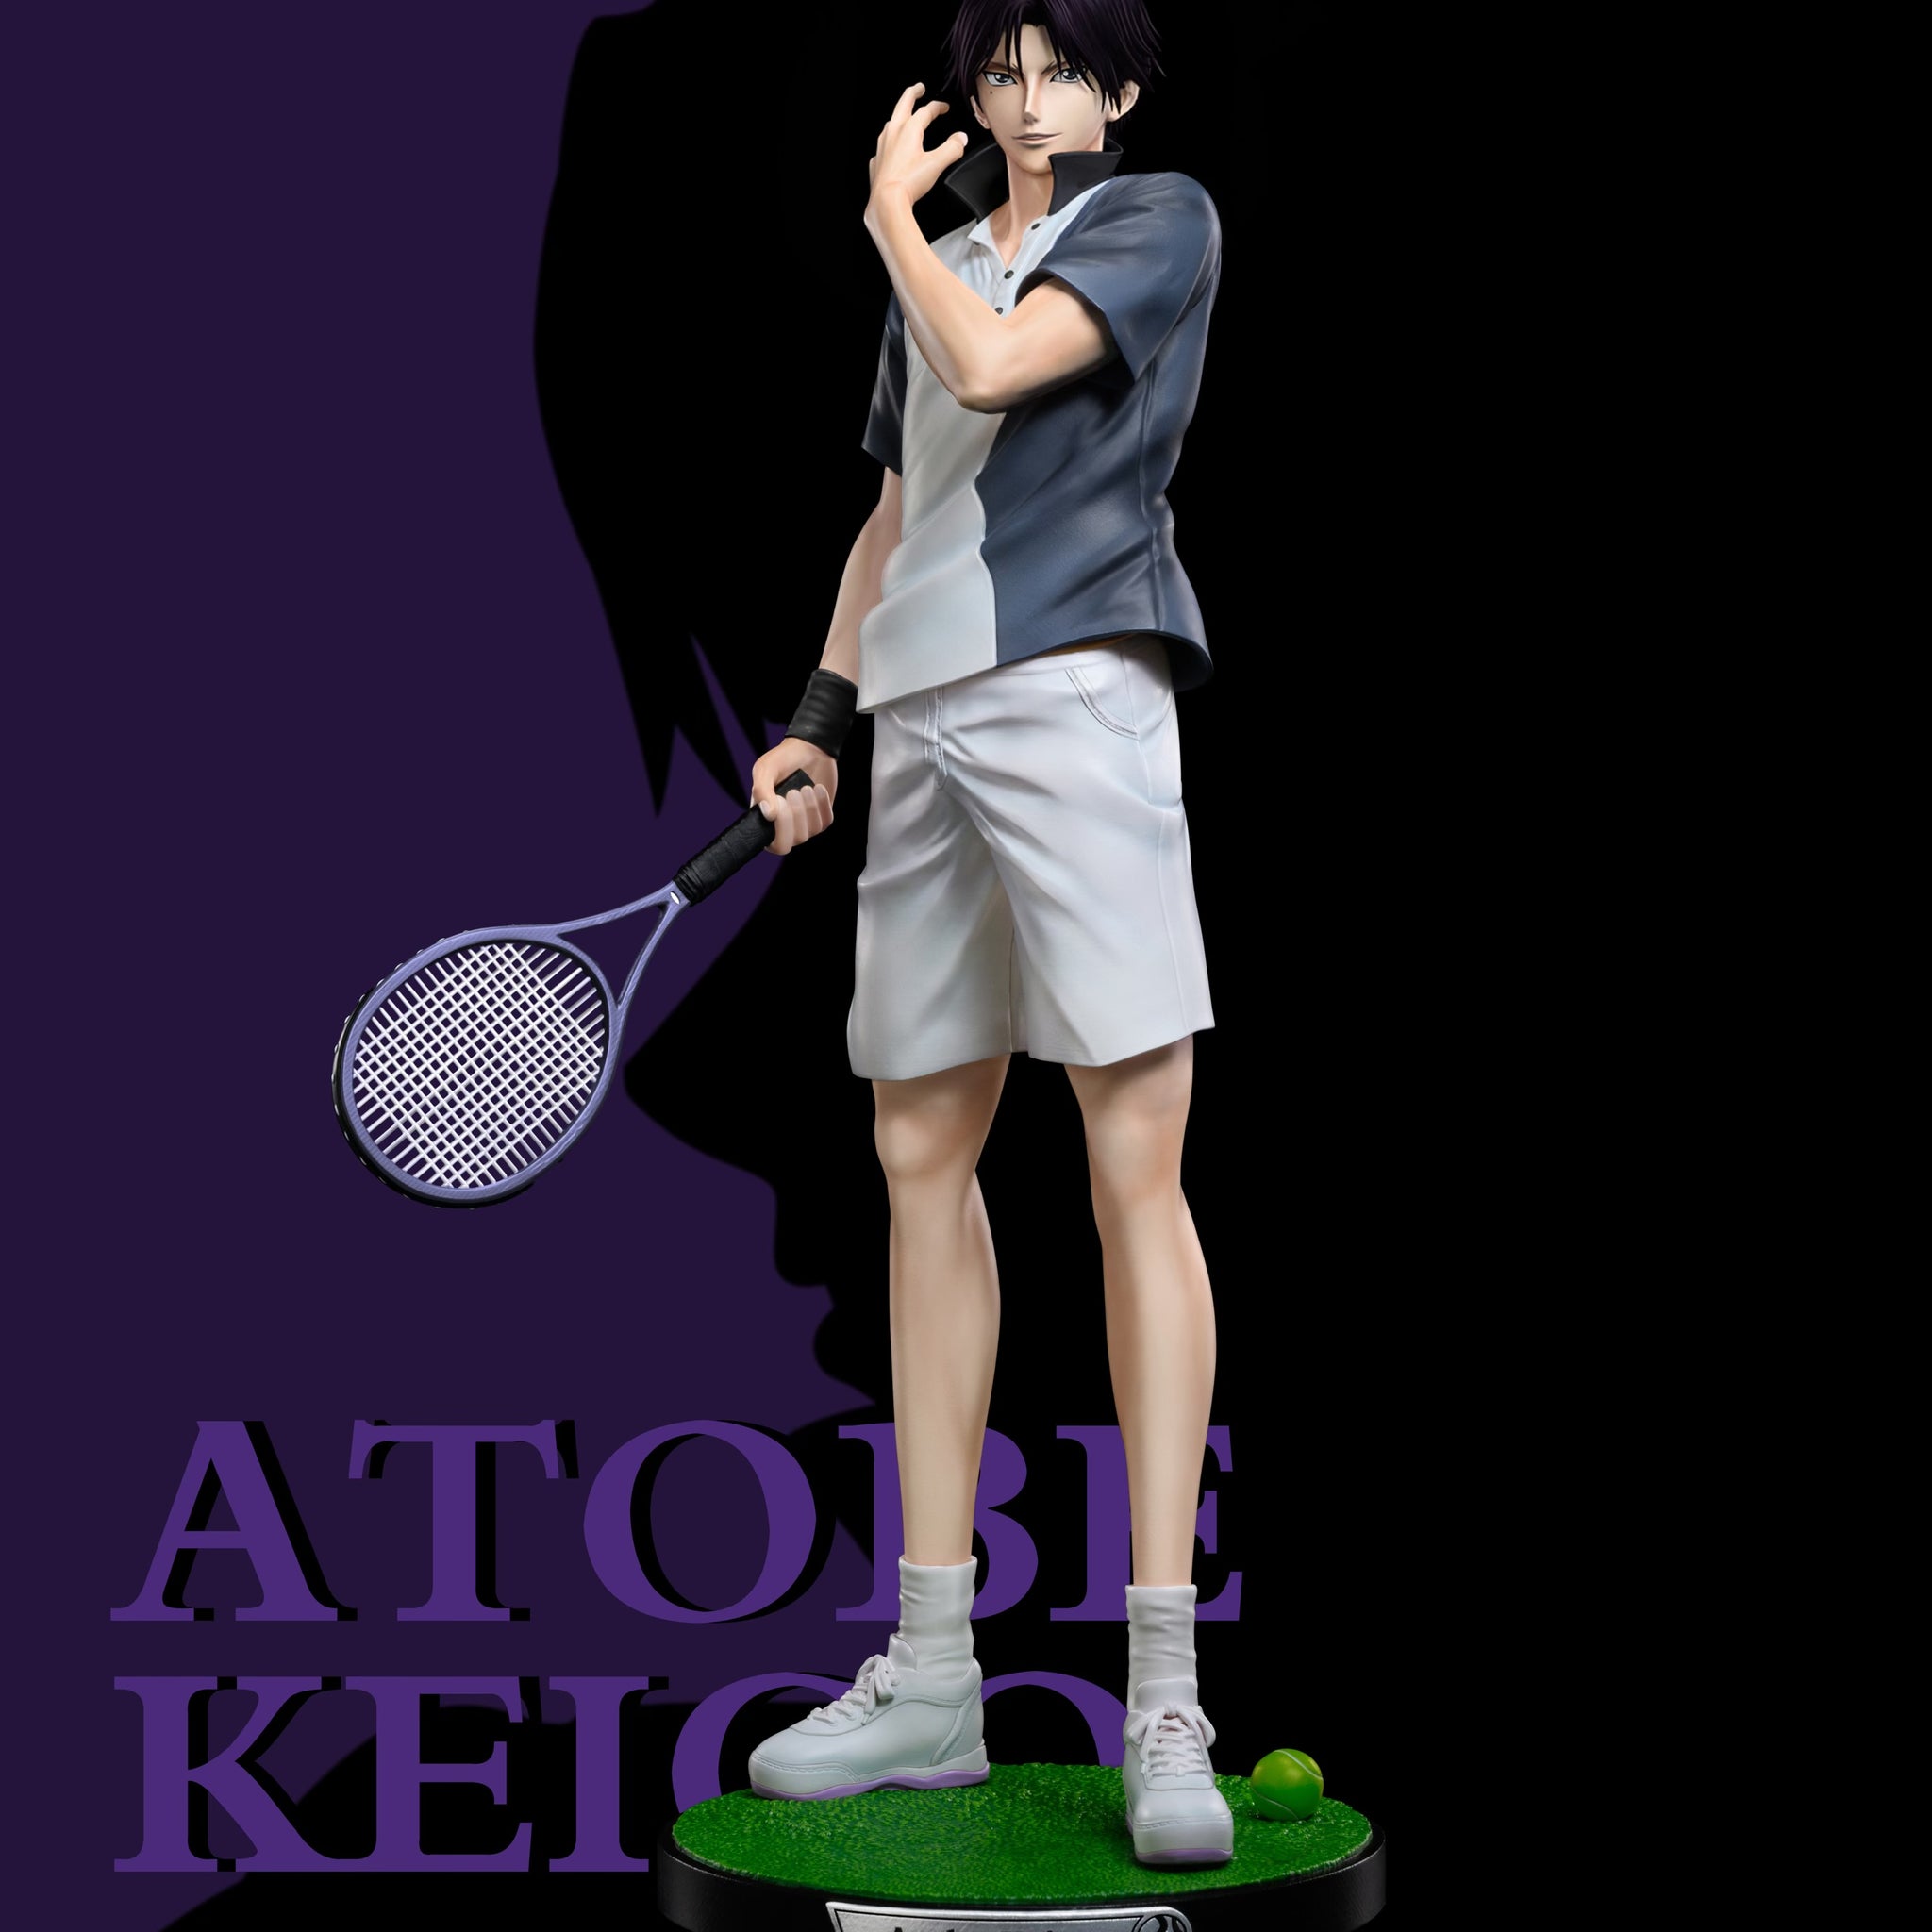 Prince of Tennis Diamond Studio Atobe Keigo Resin Statue [PRE-ORDER]